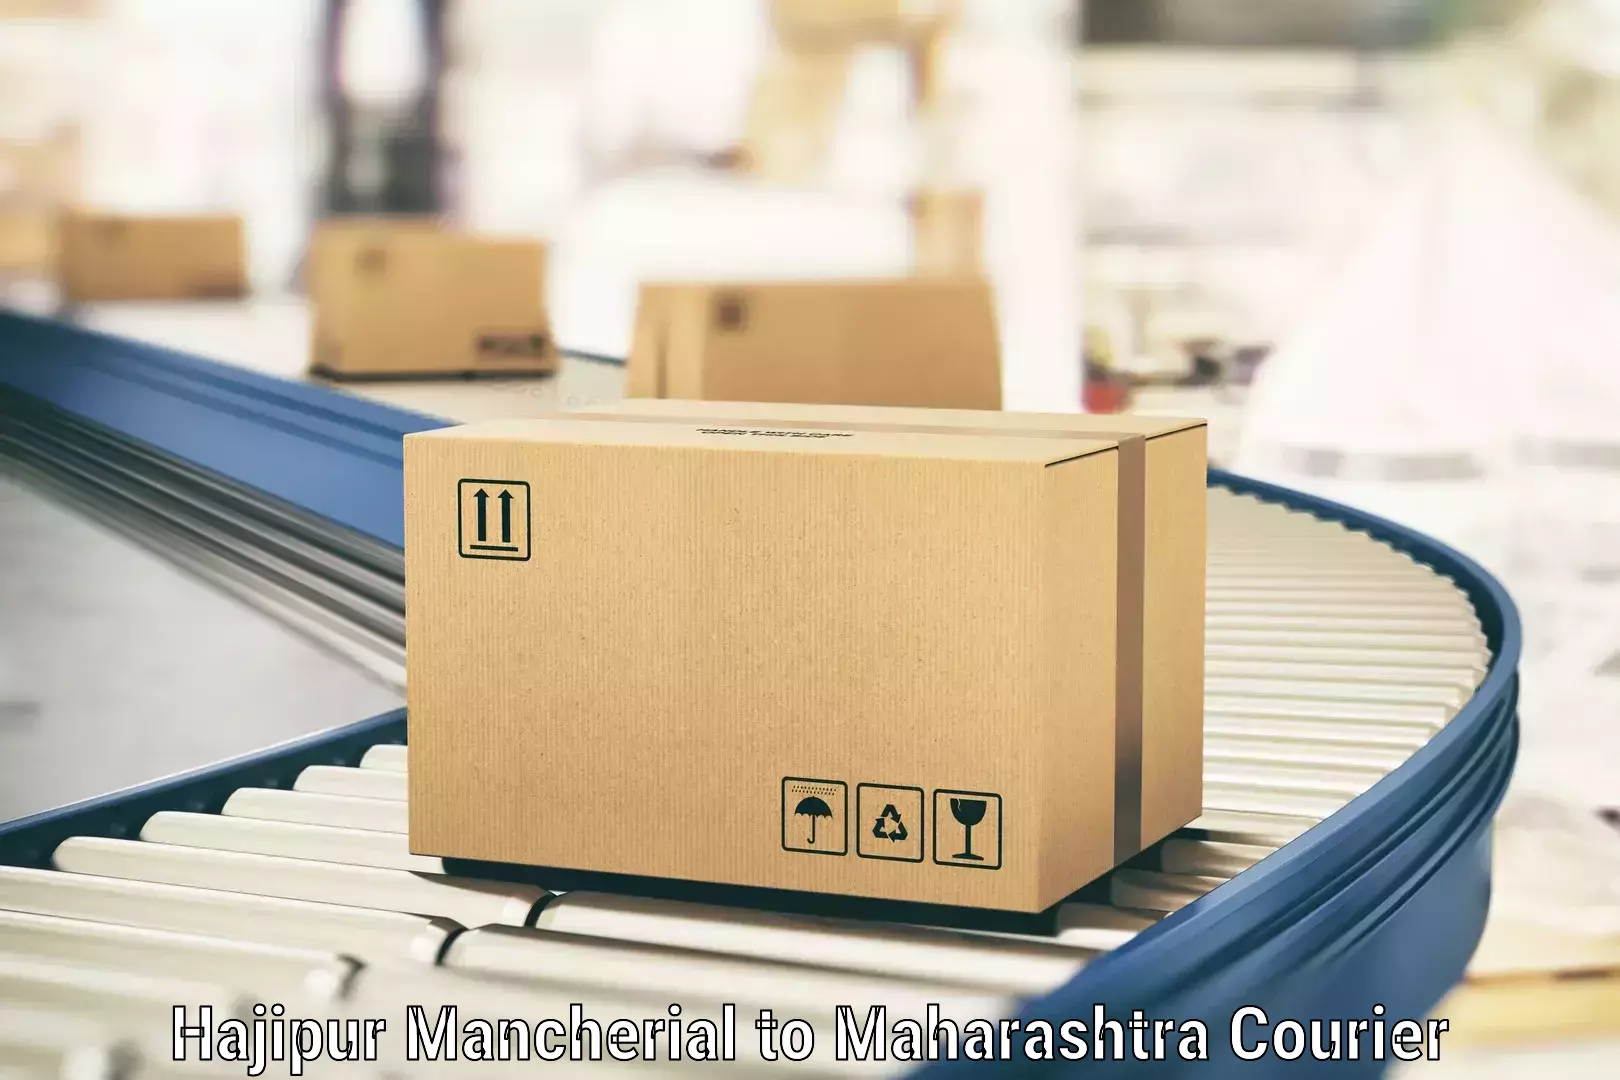 Express delivery capabilities Hajipur Mancherial to Mahabaleshwar